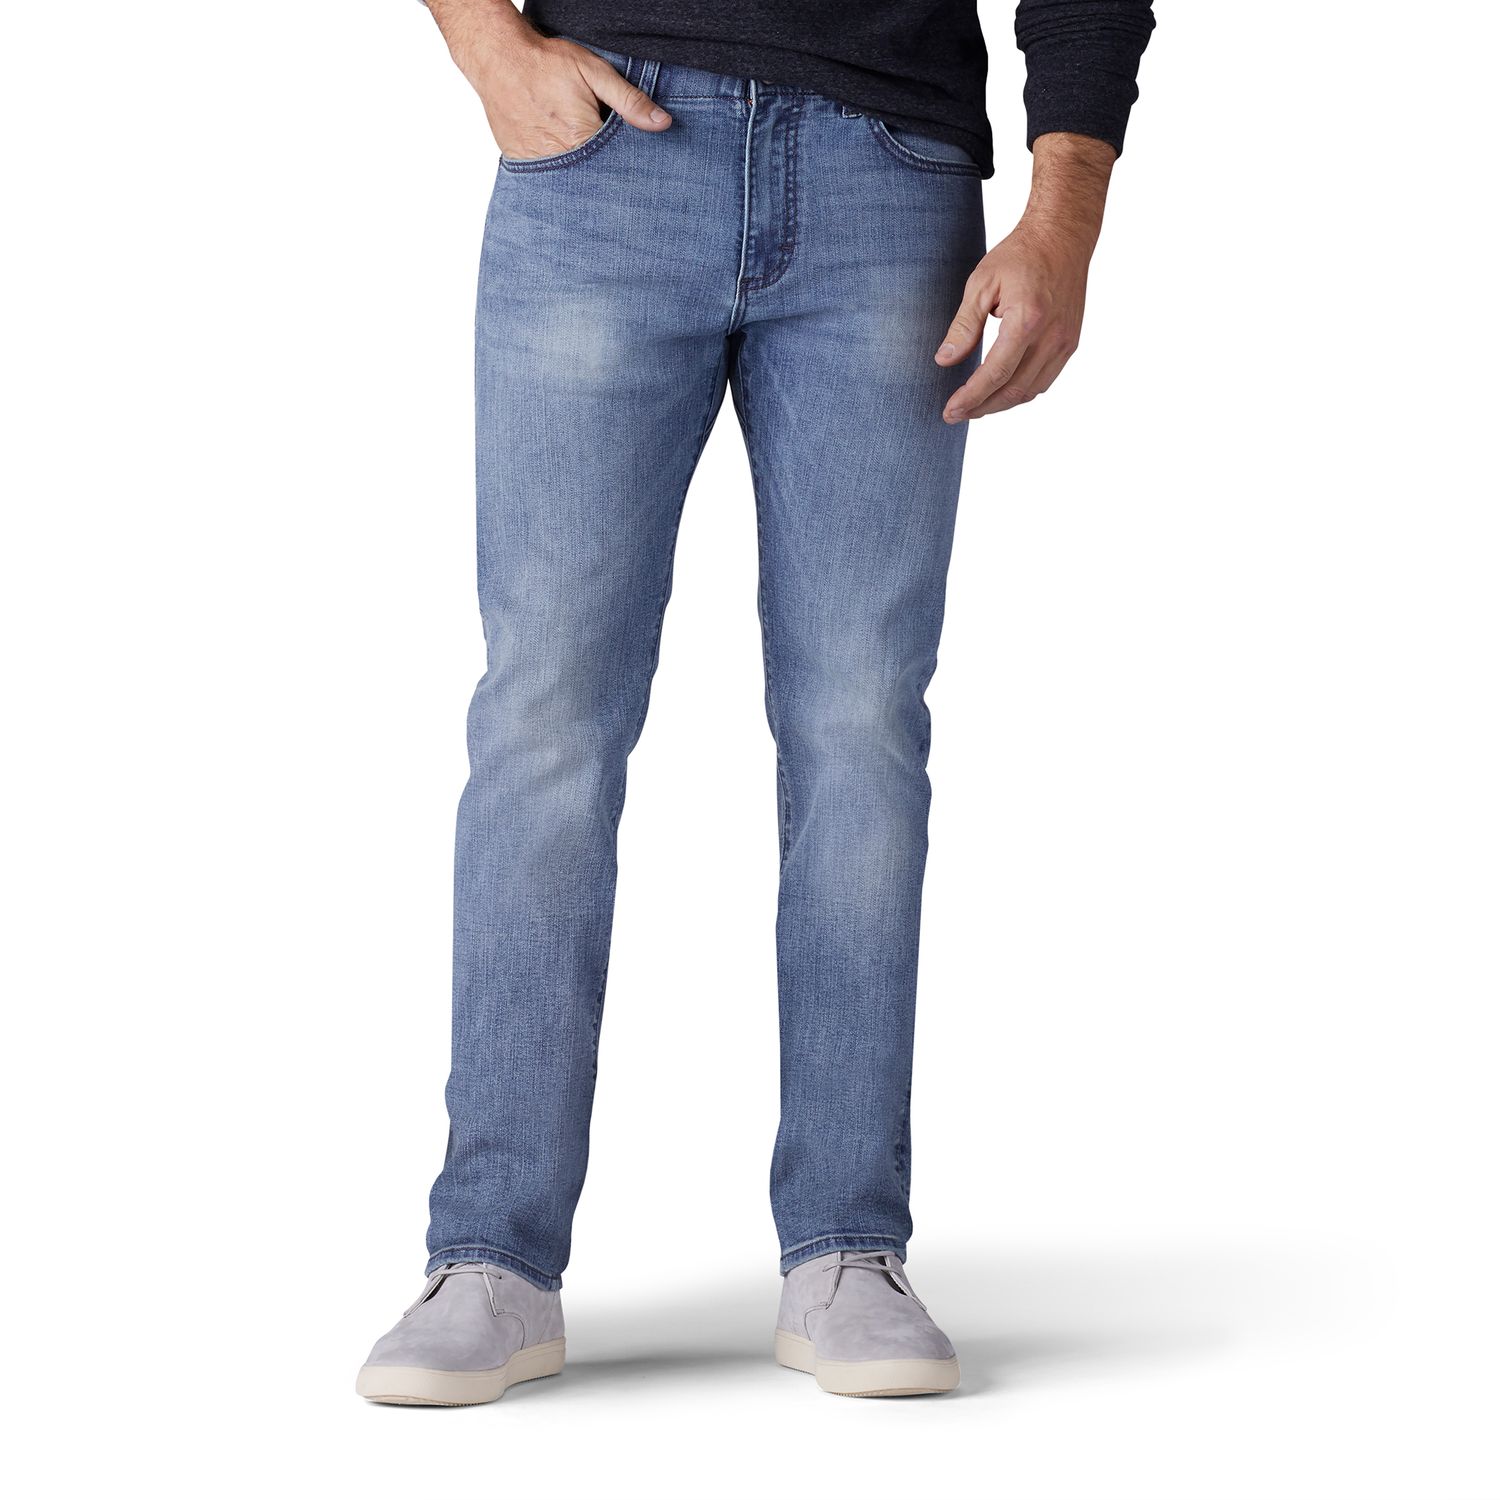 lee jeans online shop